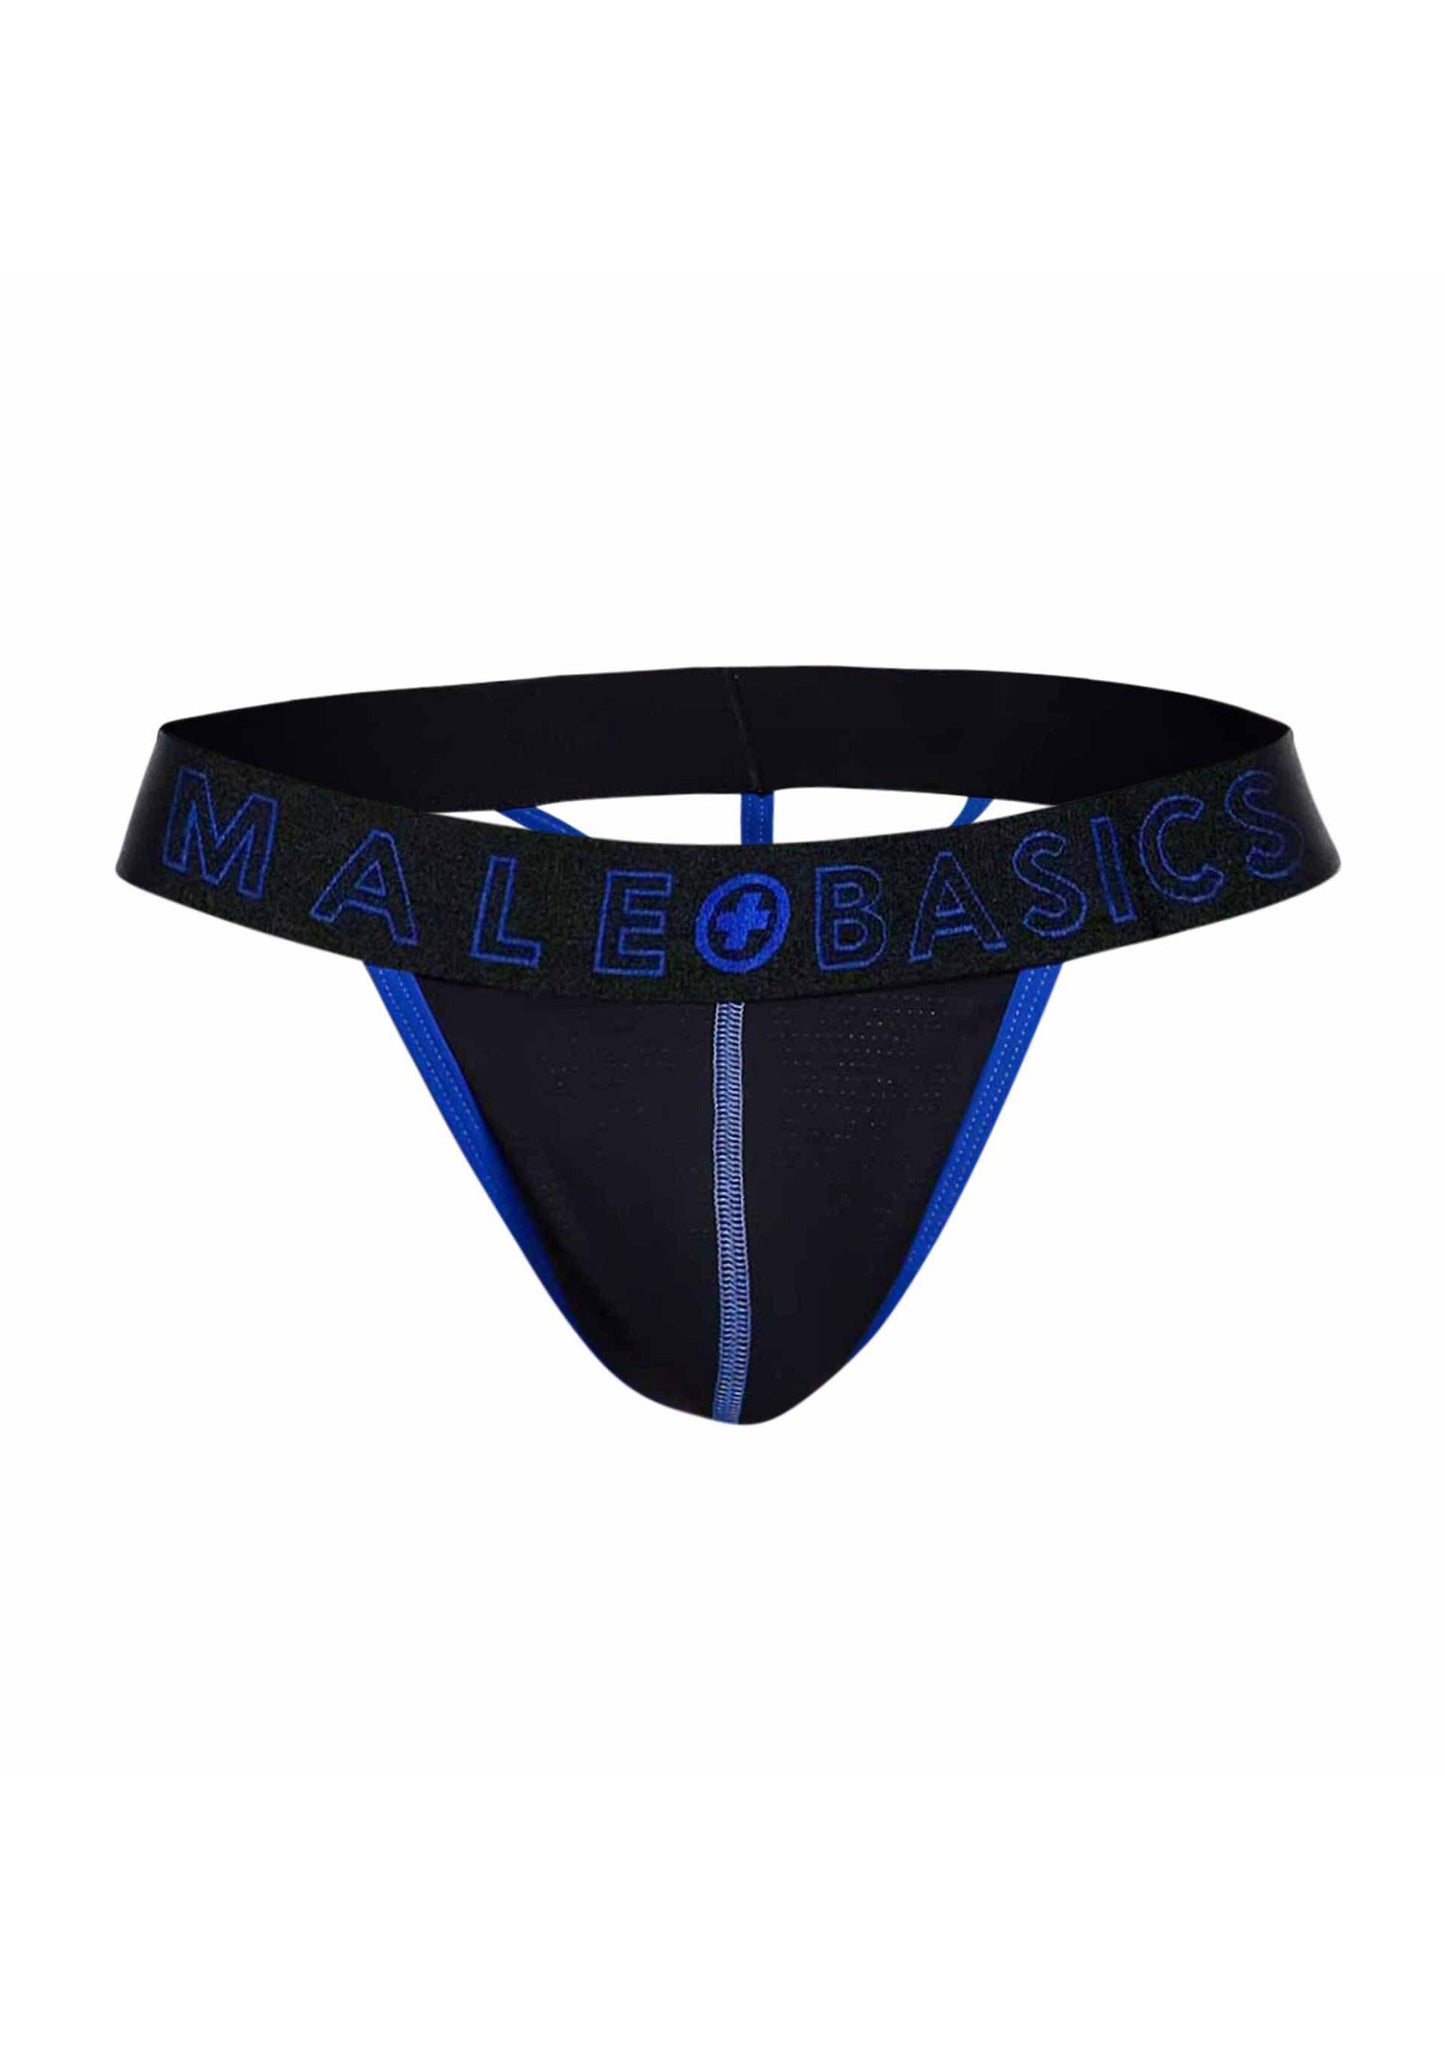 MaleBasics Neon Thong BLUE S - 4